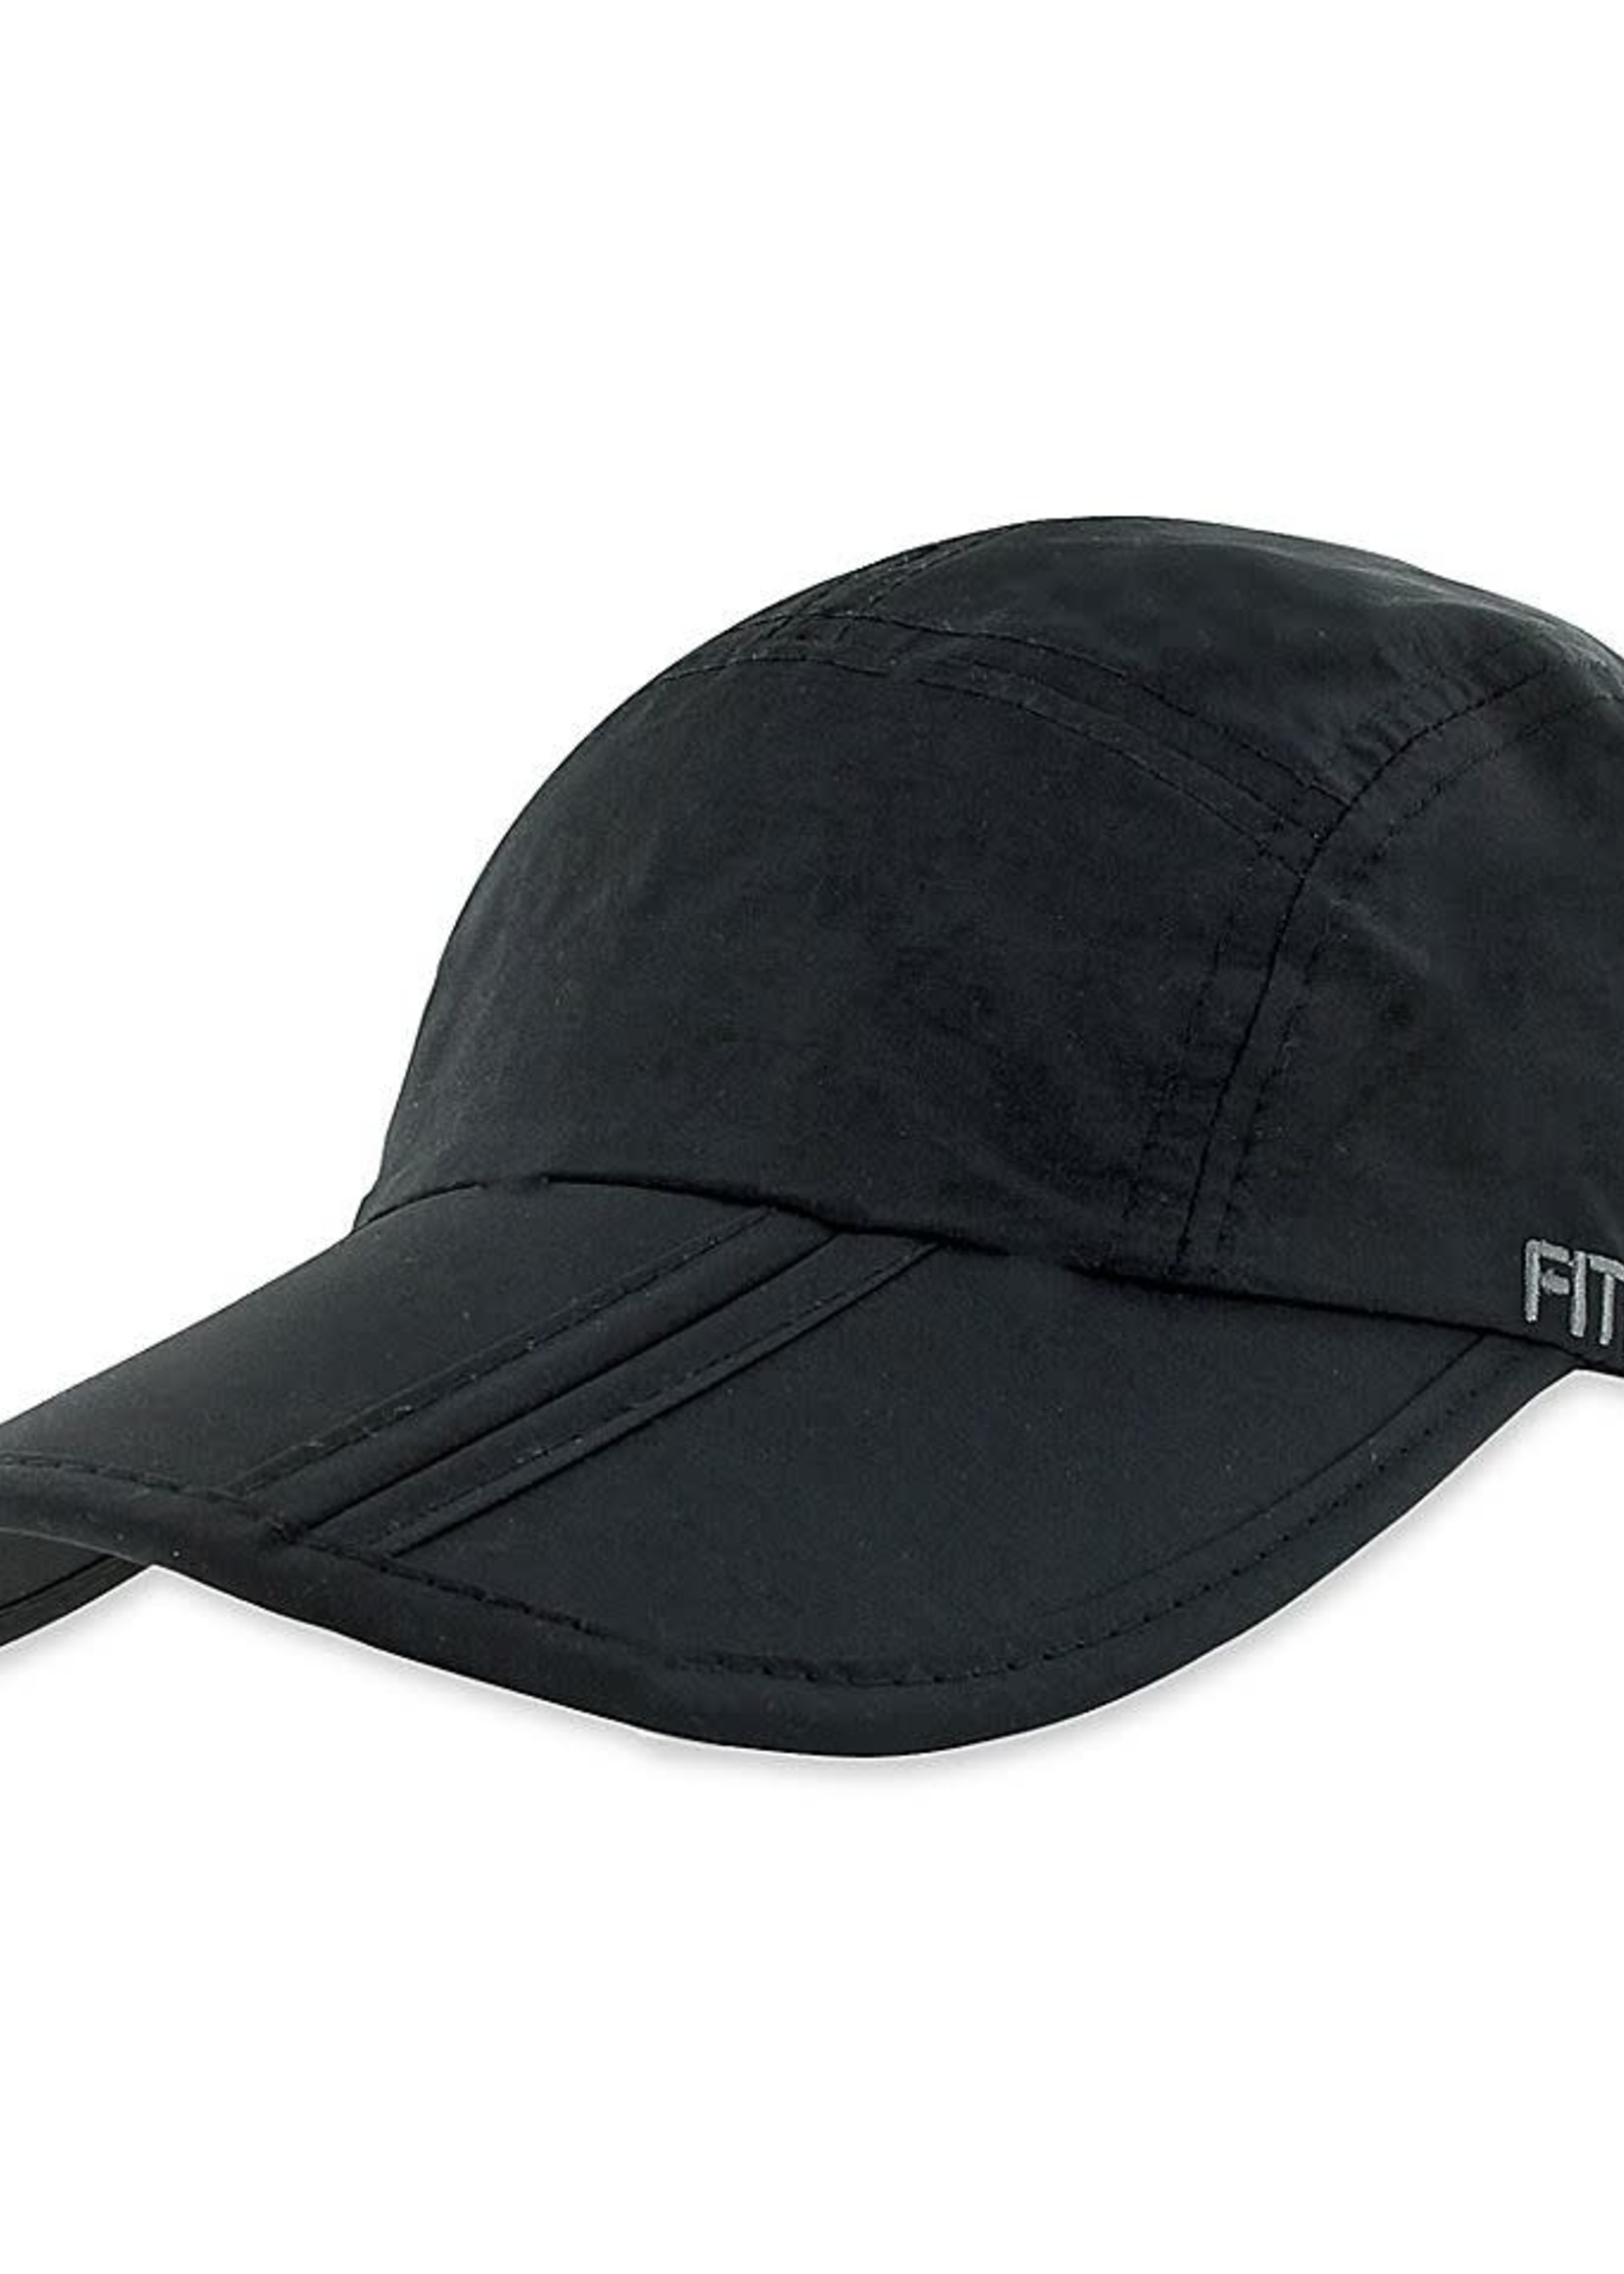 Fitkicks Folding Adjustable Cap UPF 50+ Black